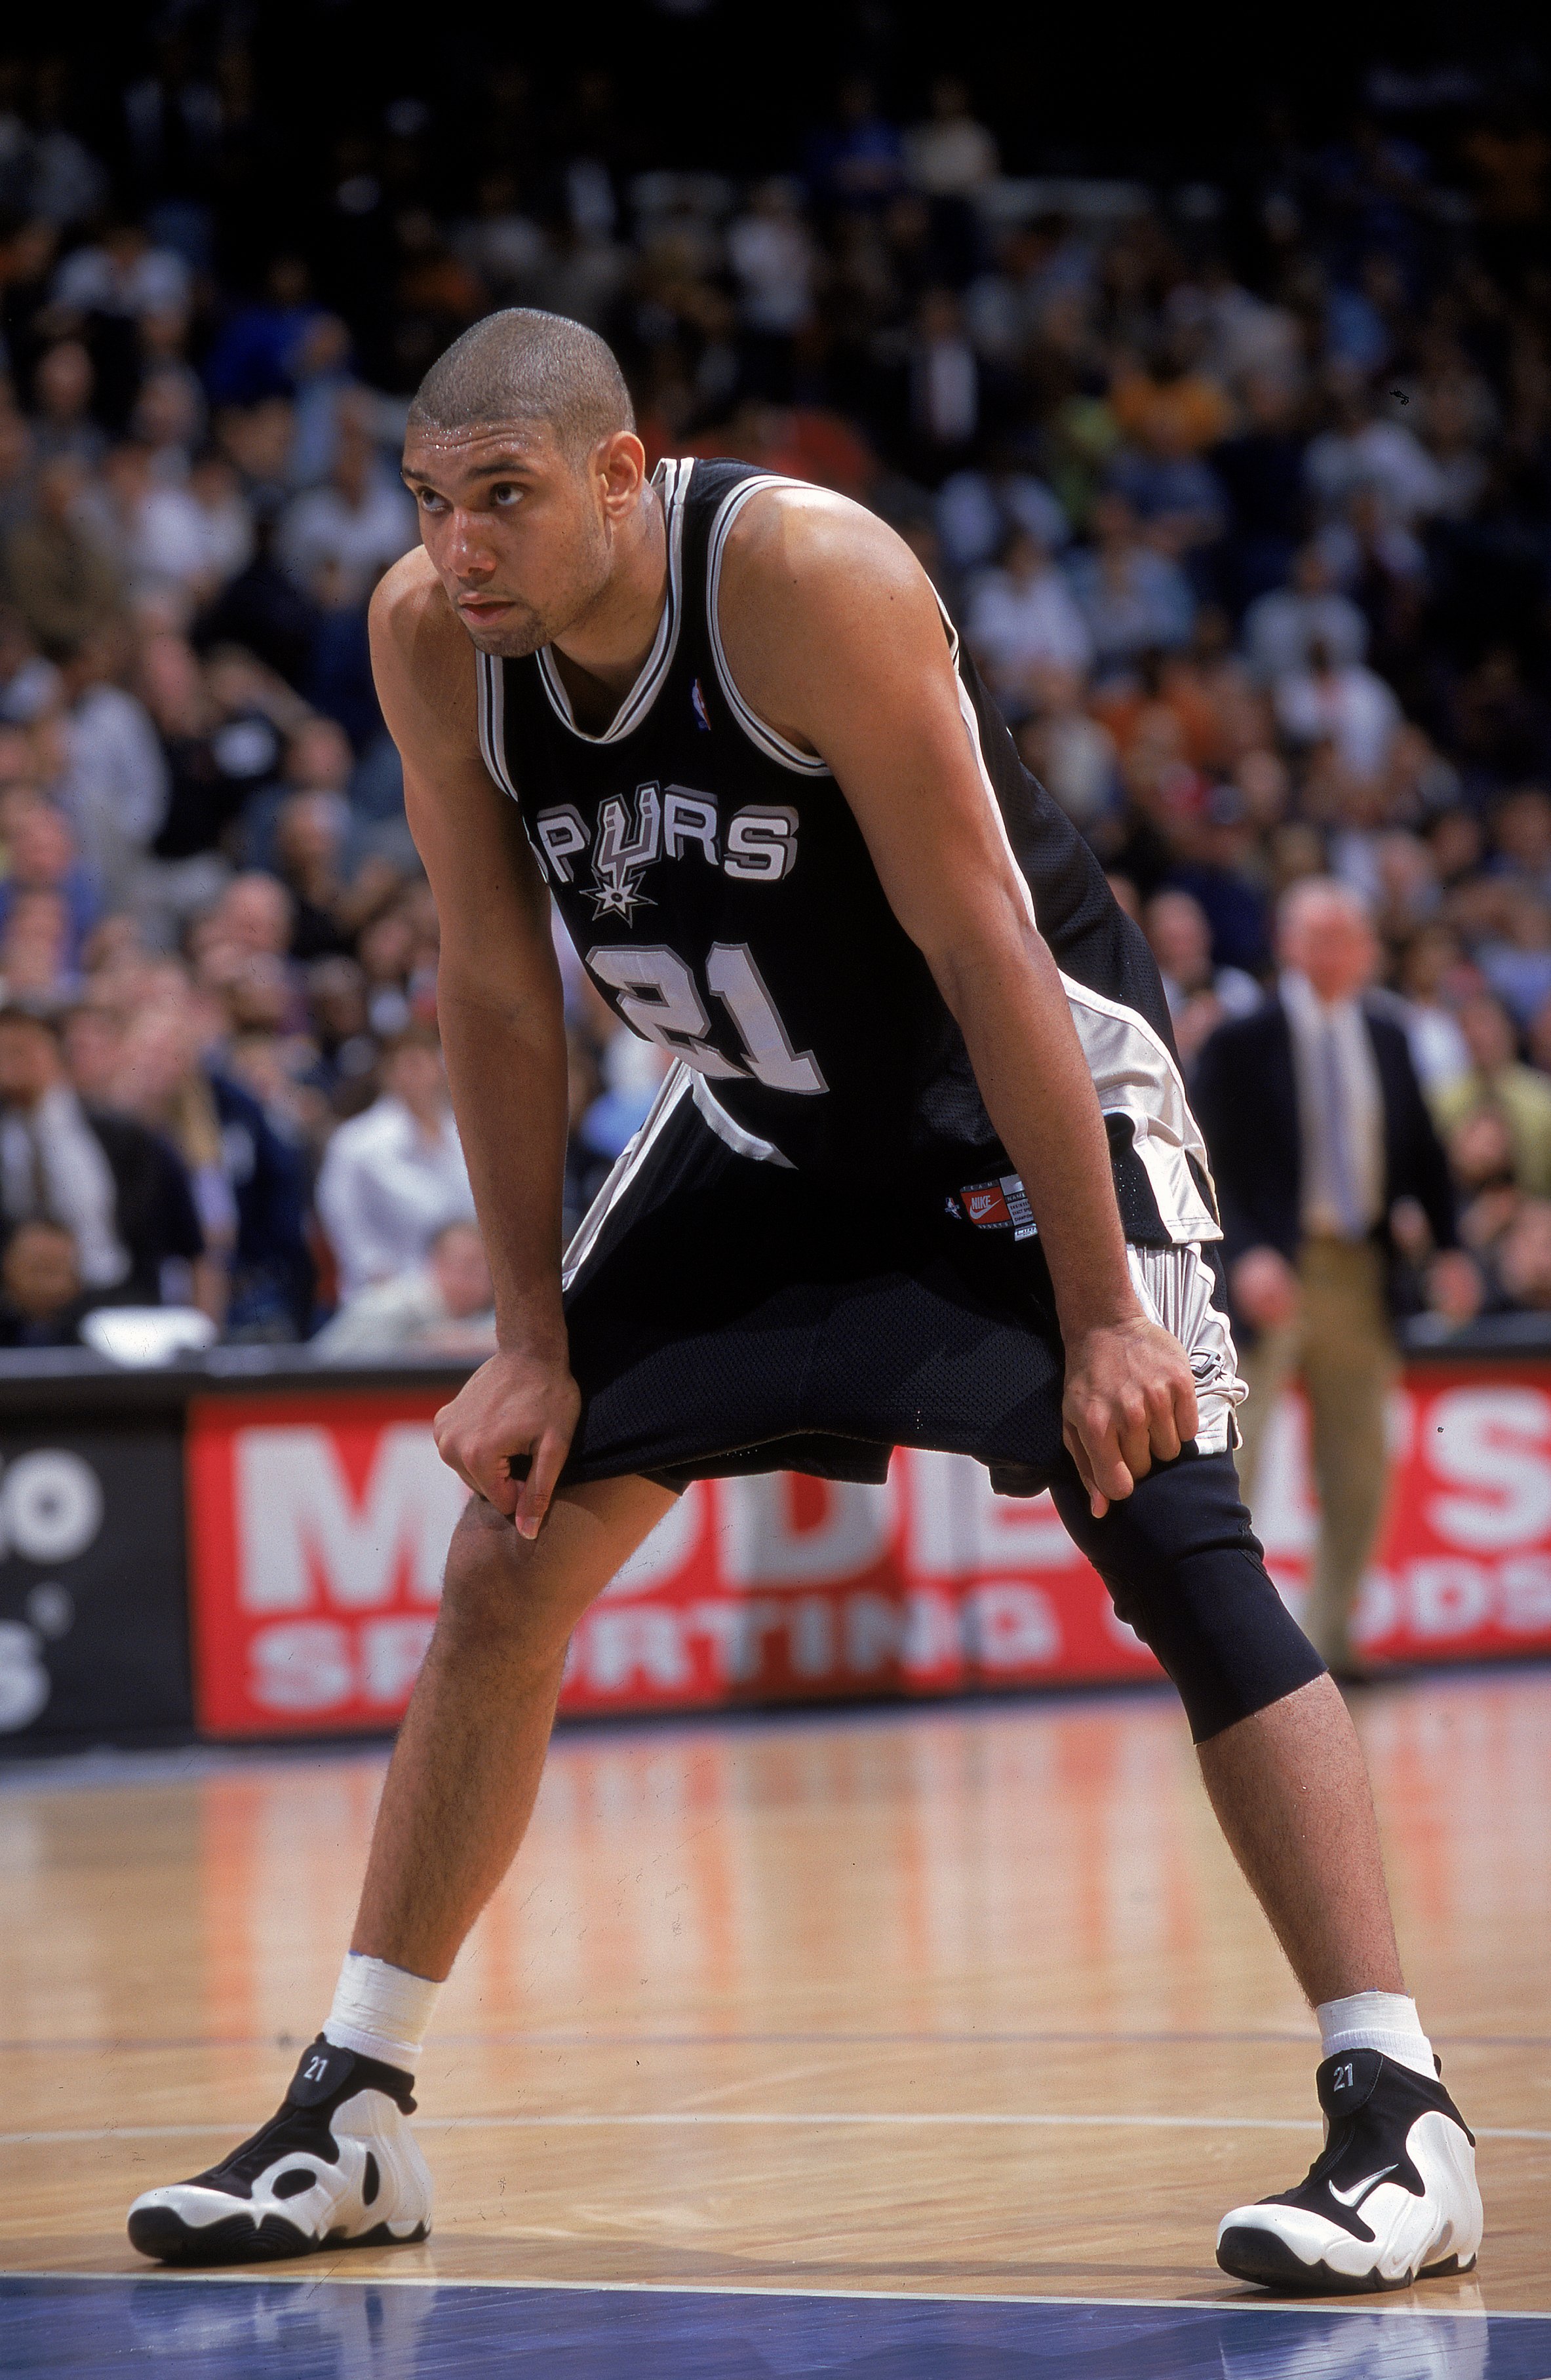 NBA: San Antonio Spurs' Tim Duncan selected for All-Star Game in Houston, Basketball News